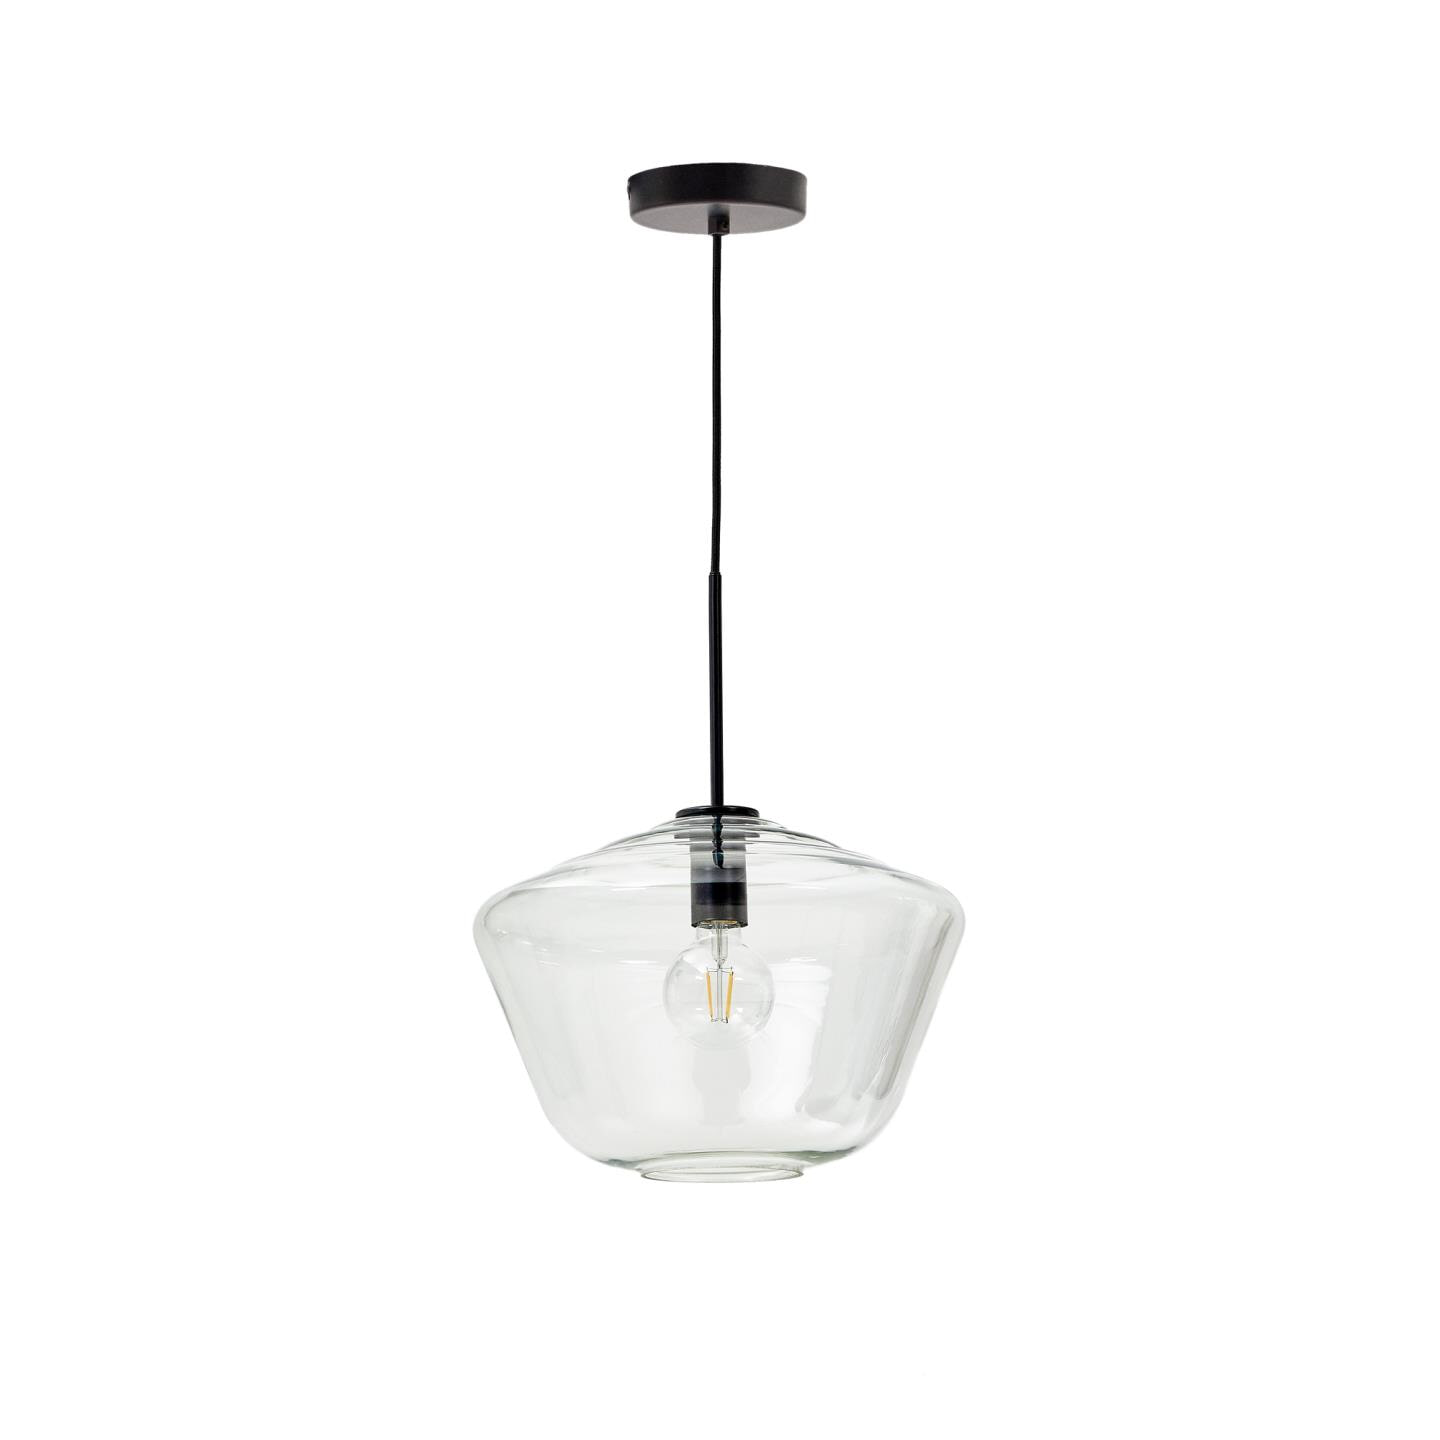 Kave Home Hanglamp Mao Glas, Ø34cm - Transparant